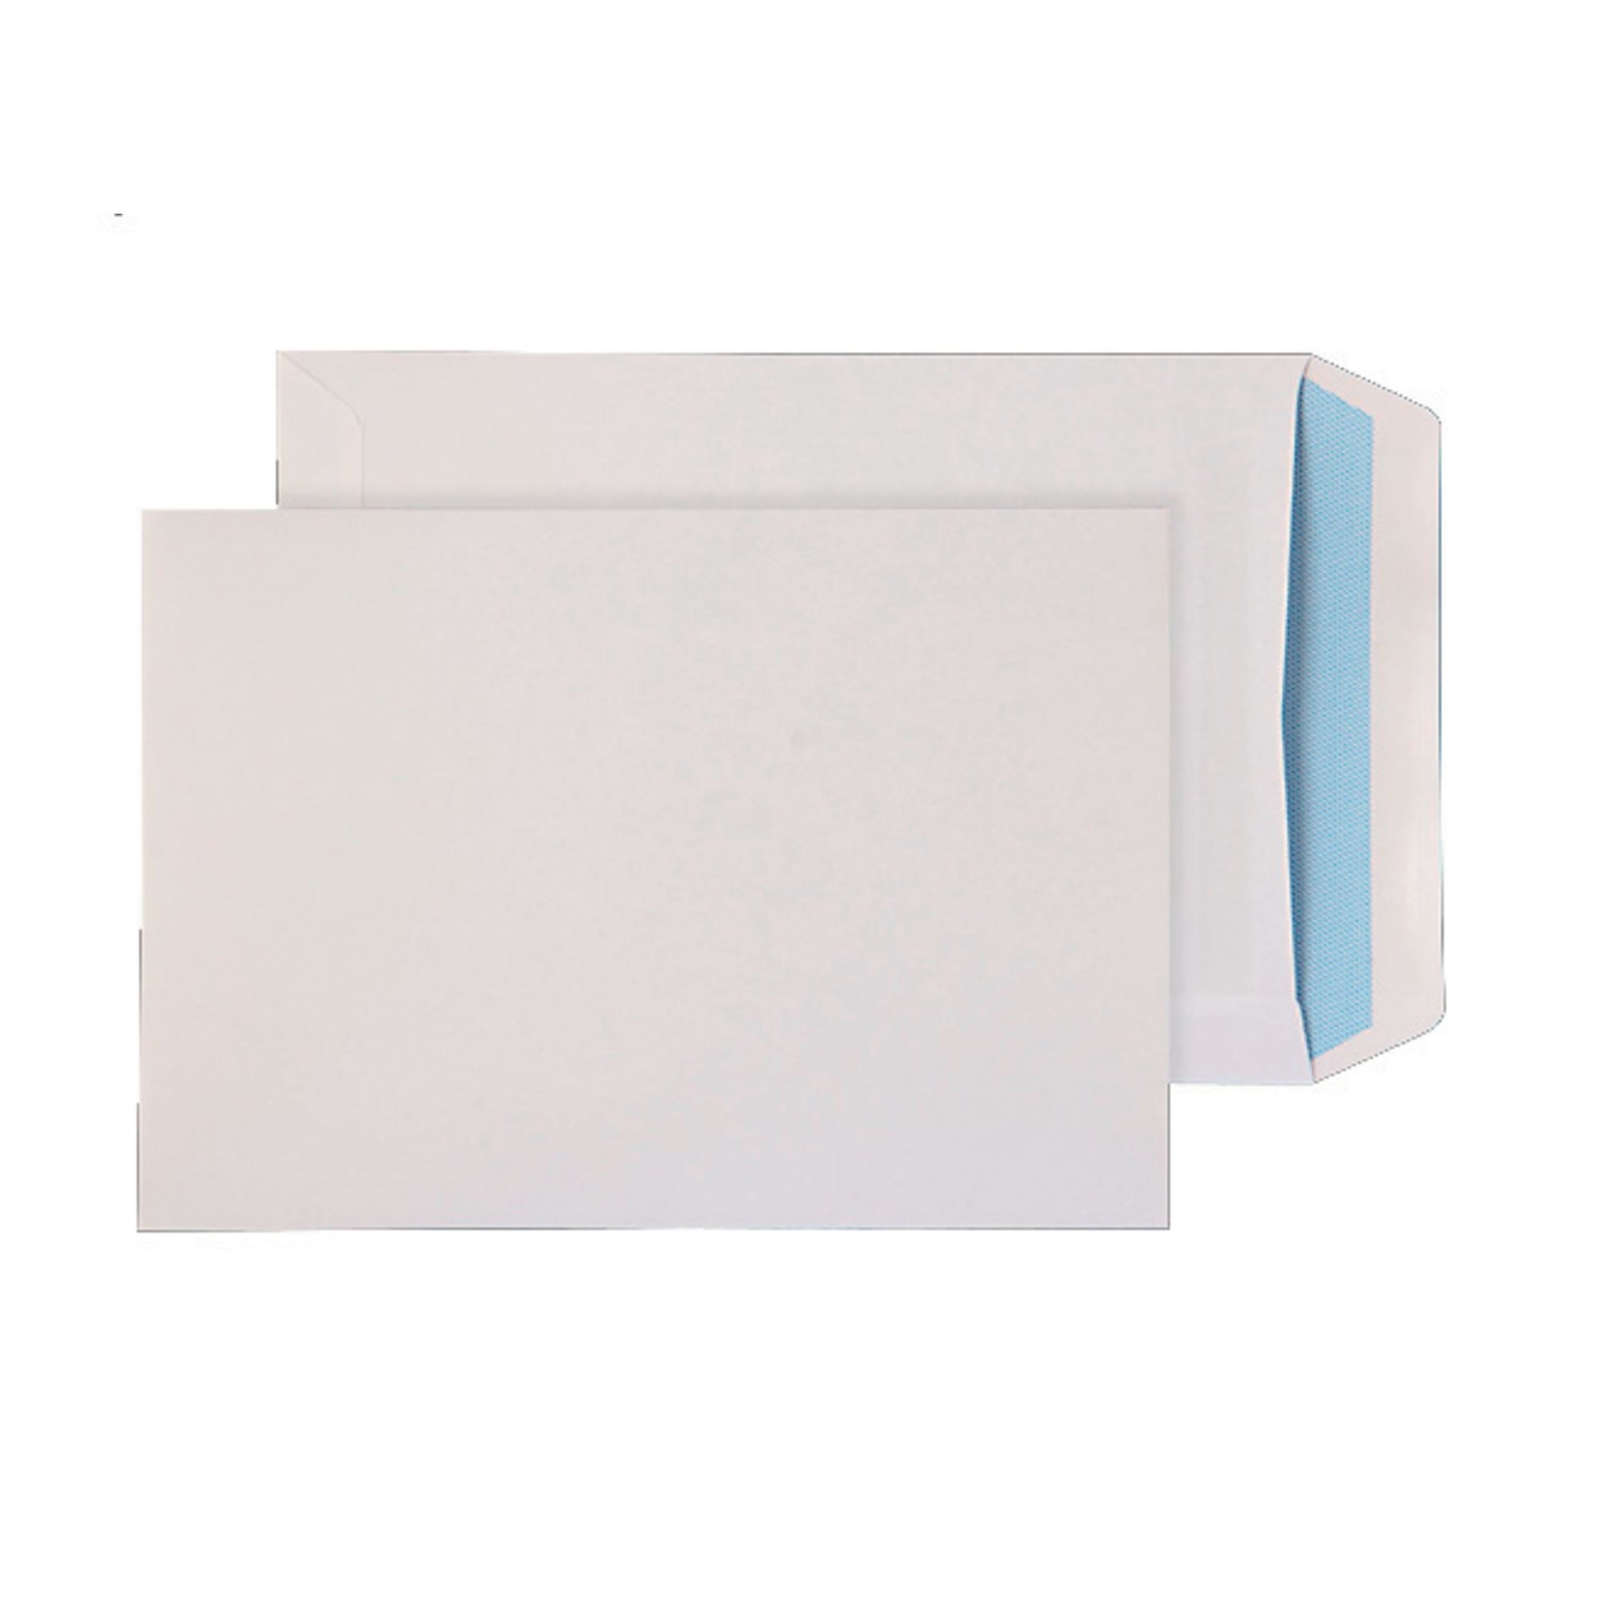 C5 White Self Seal Pocket Envelopes - Box of 500